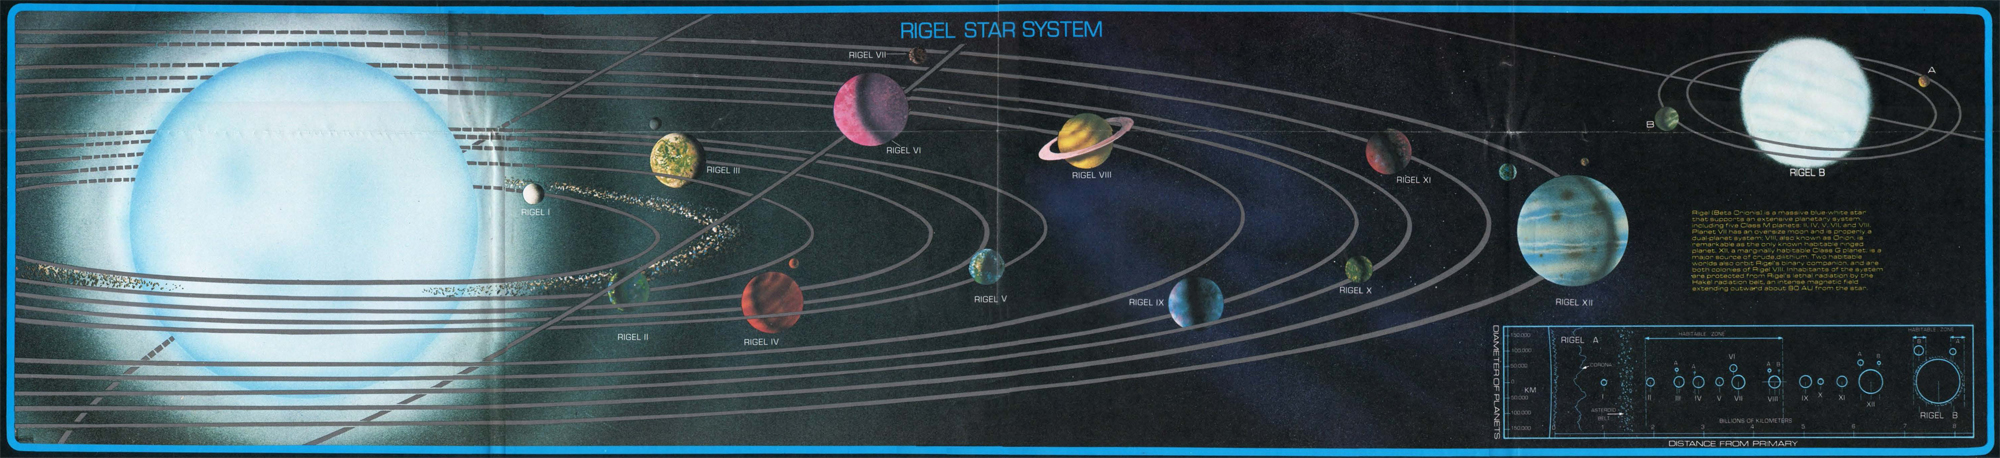 Rigel system (Maps)